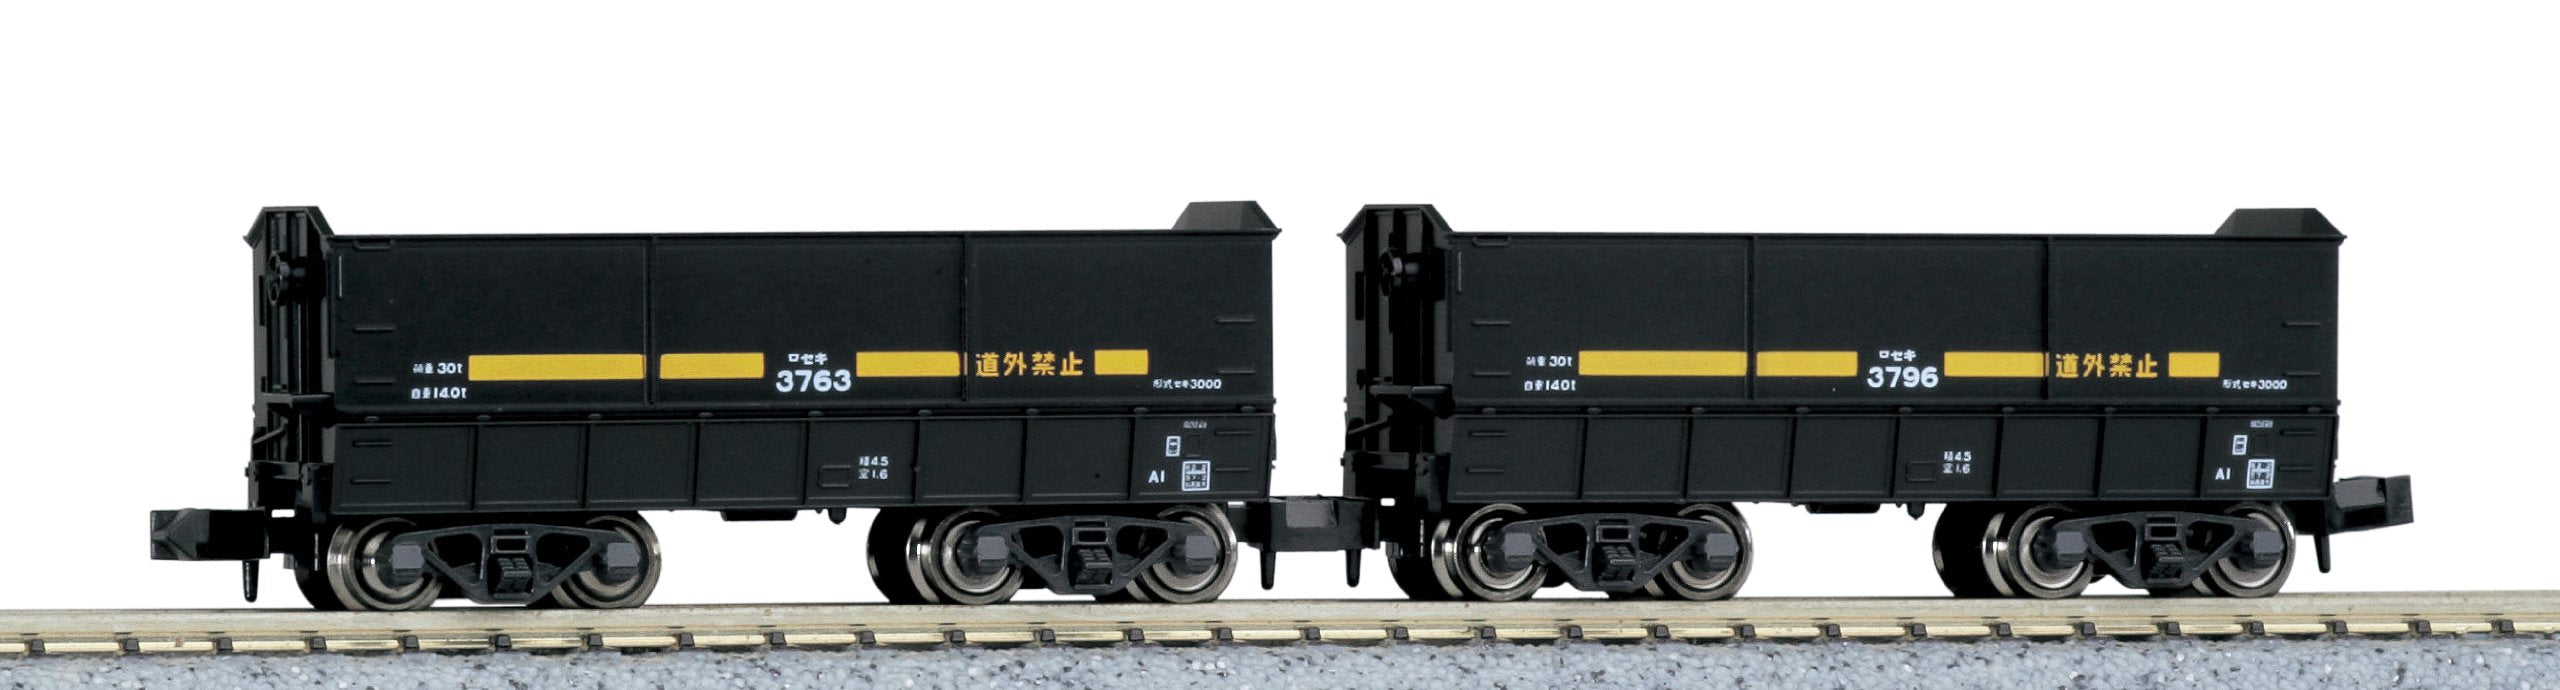 Kato N Gauge 2-Car Set Seki3000 8028 Model Railroad Freight Car